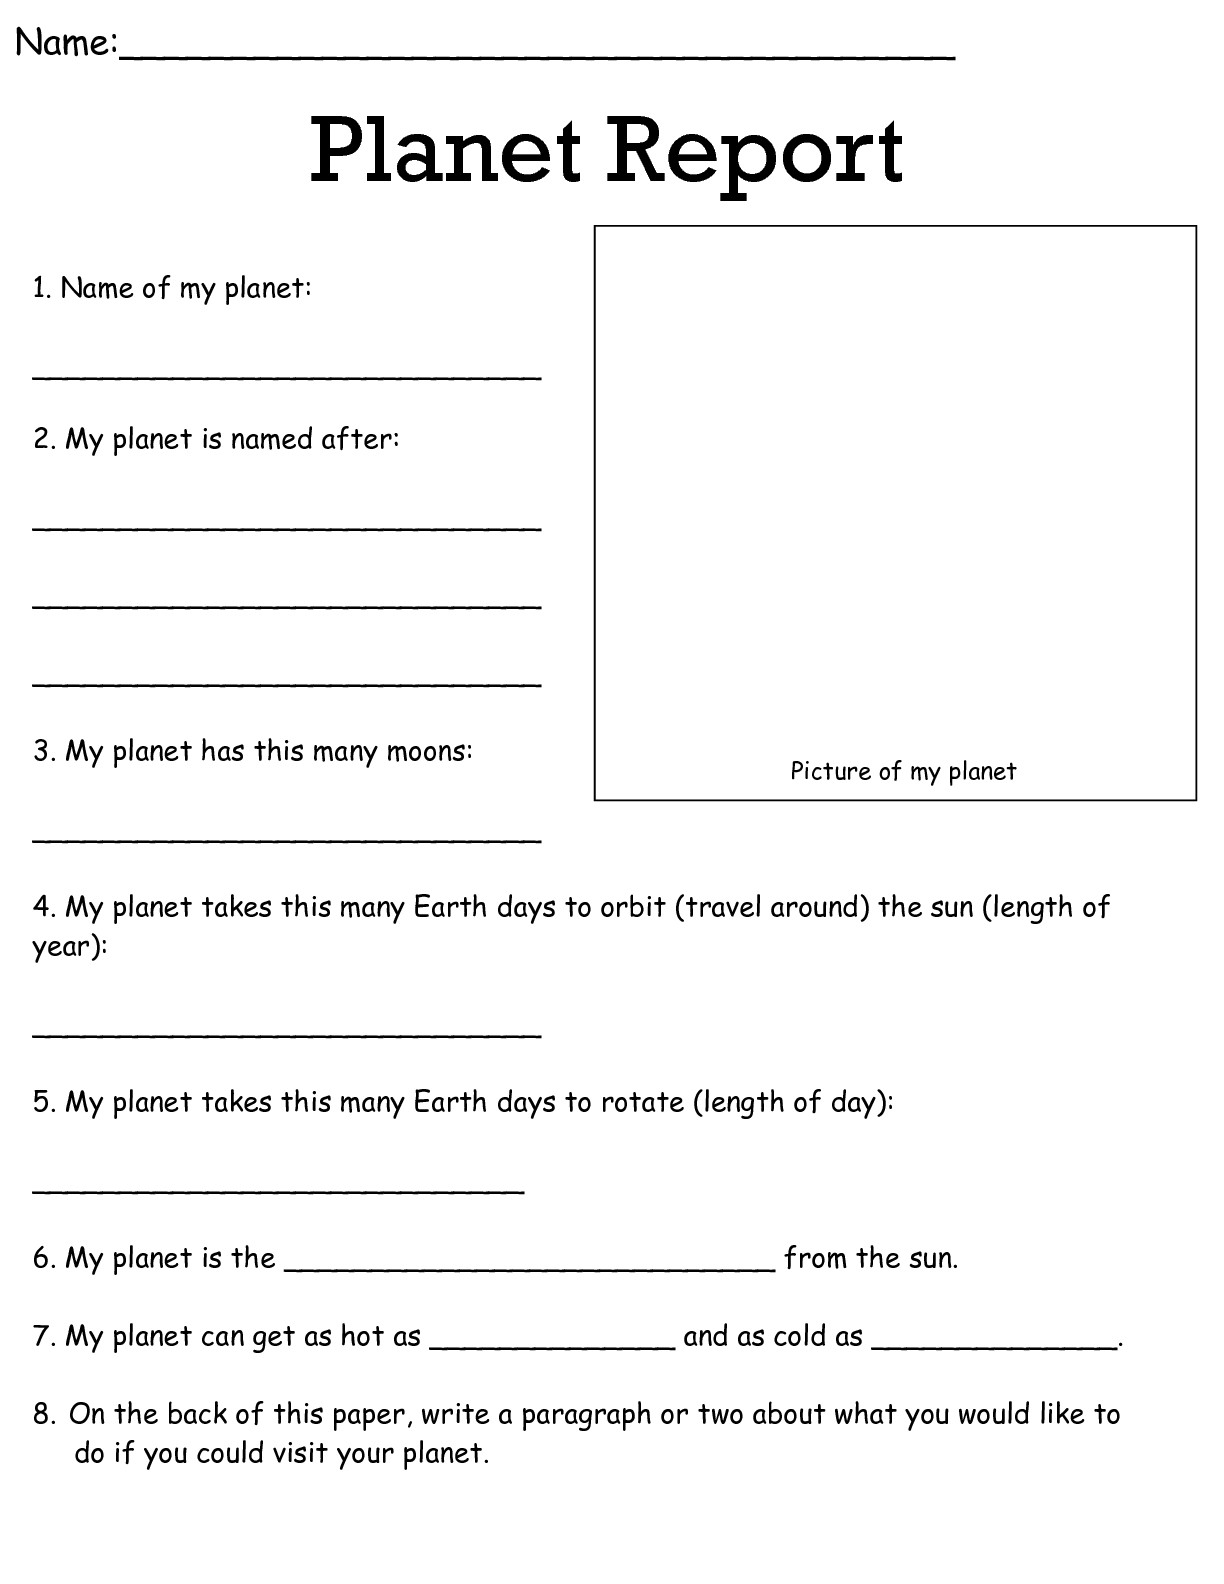 planet report worksheet example1